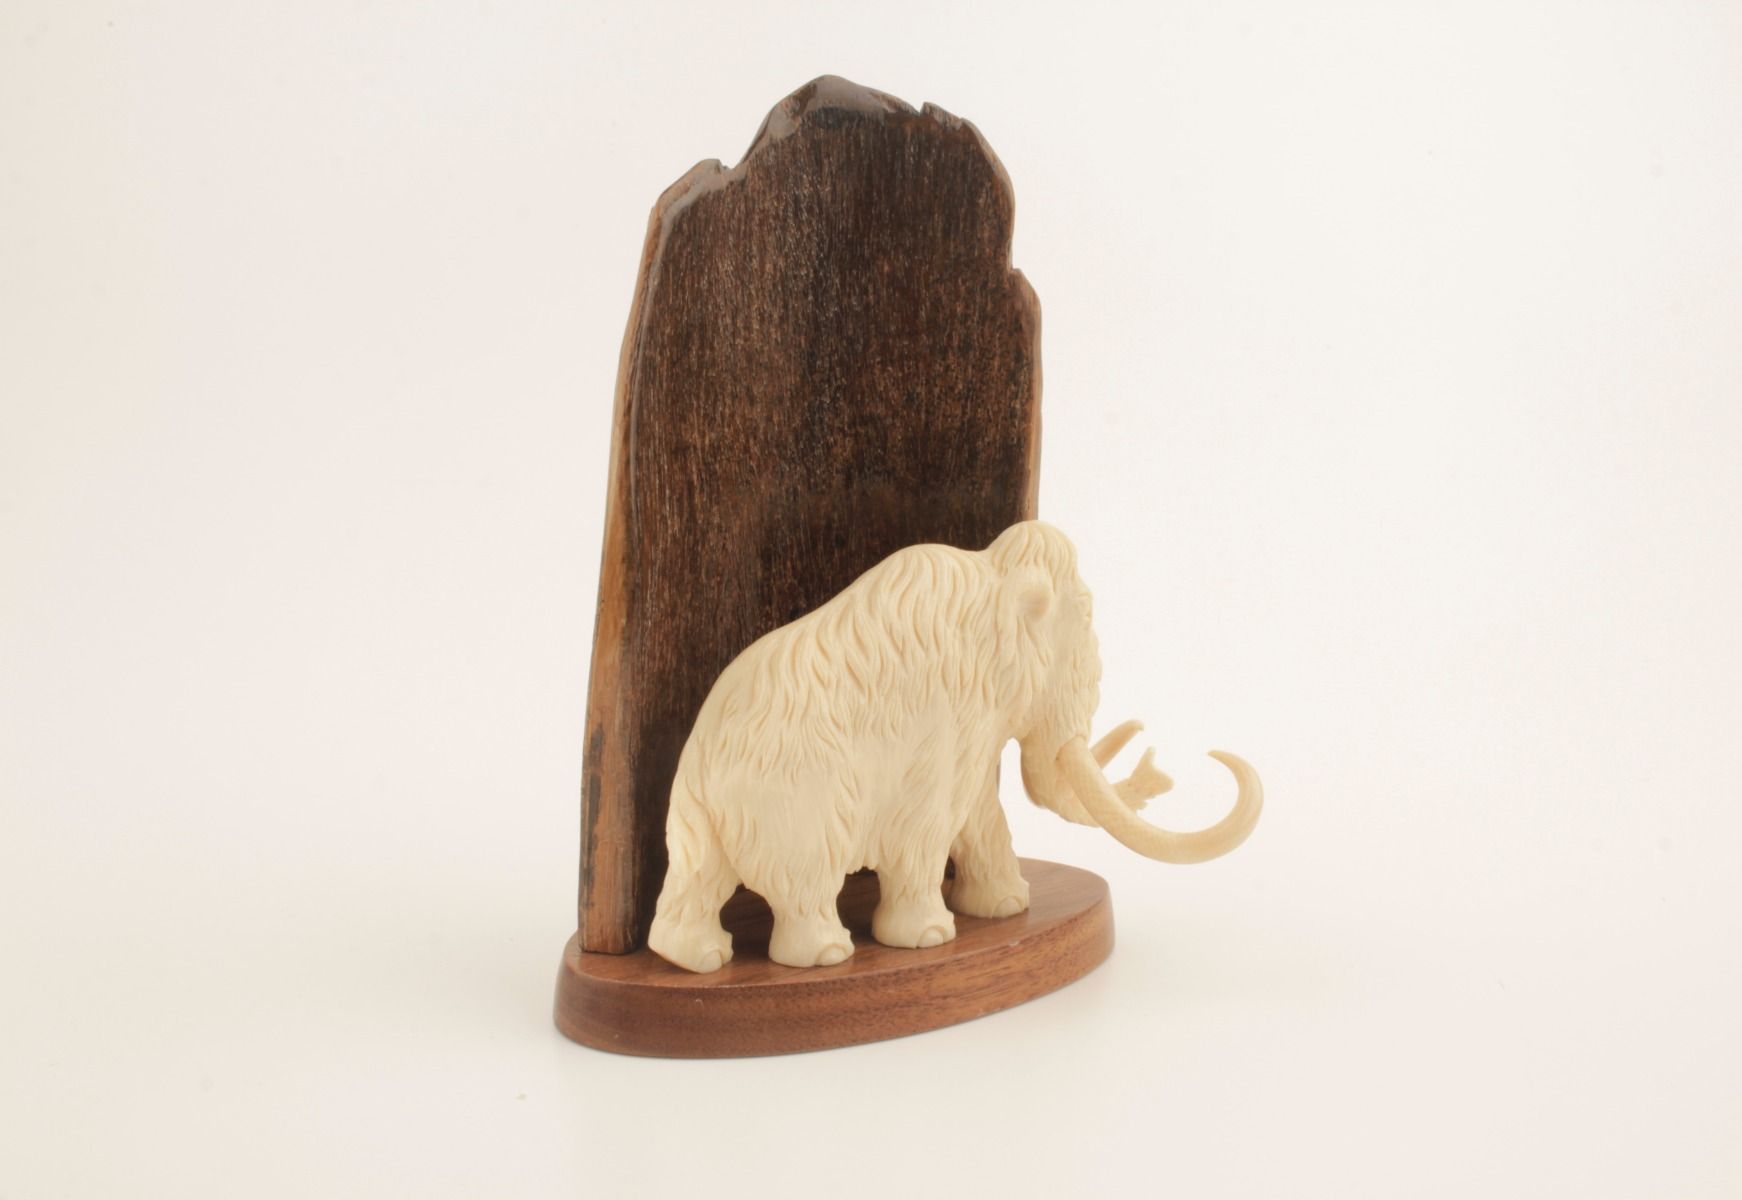 Carved mammoth ivory figurine